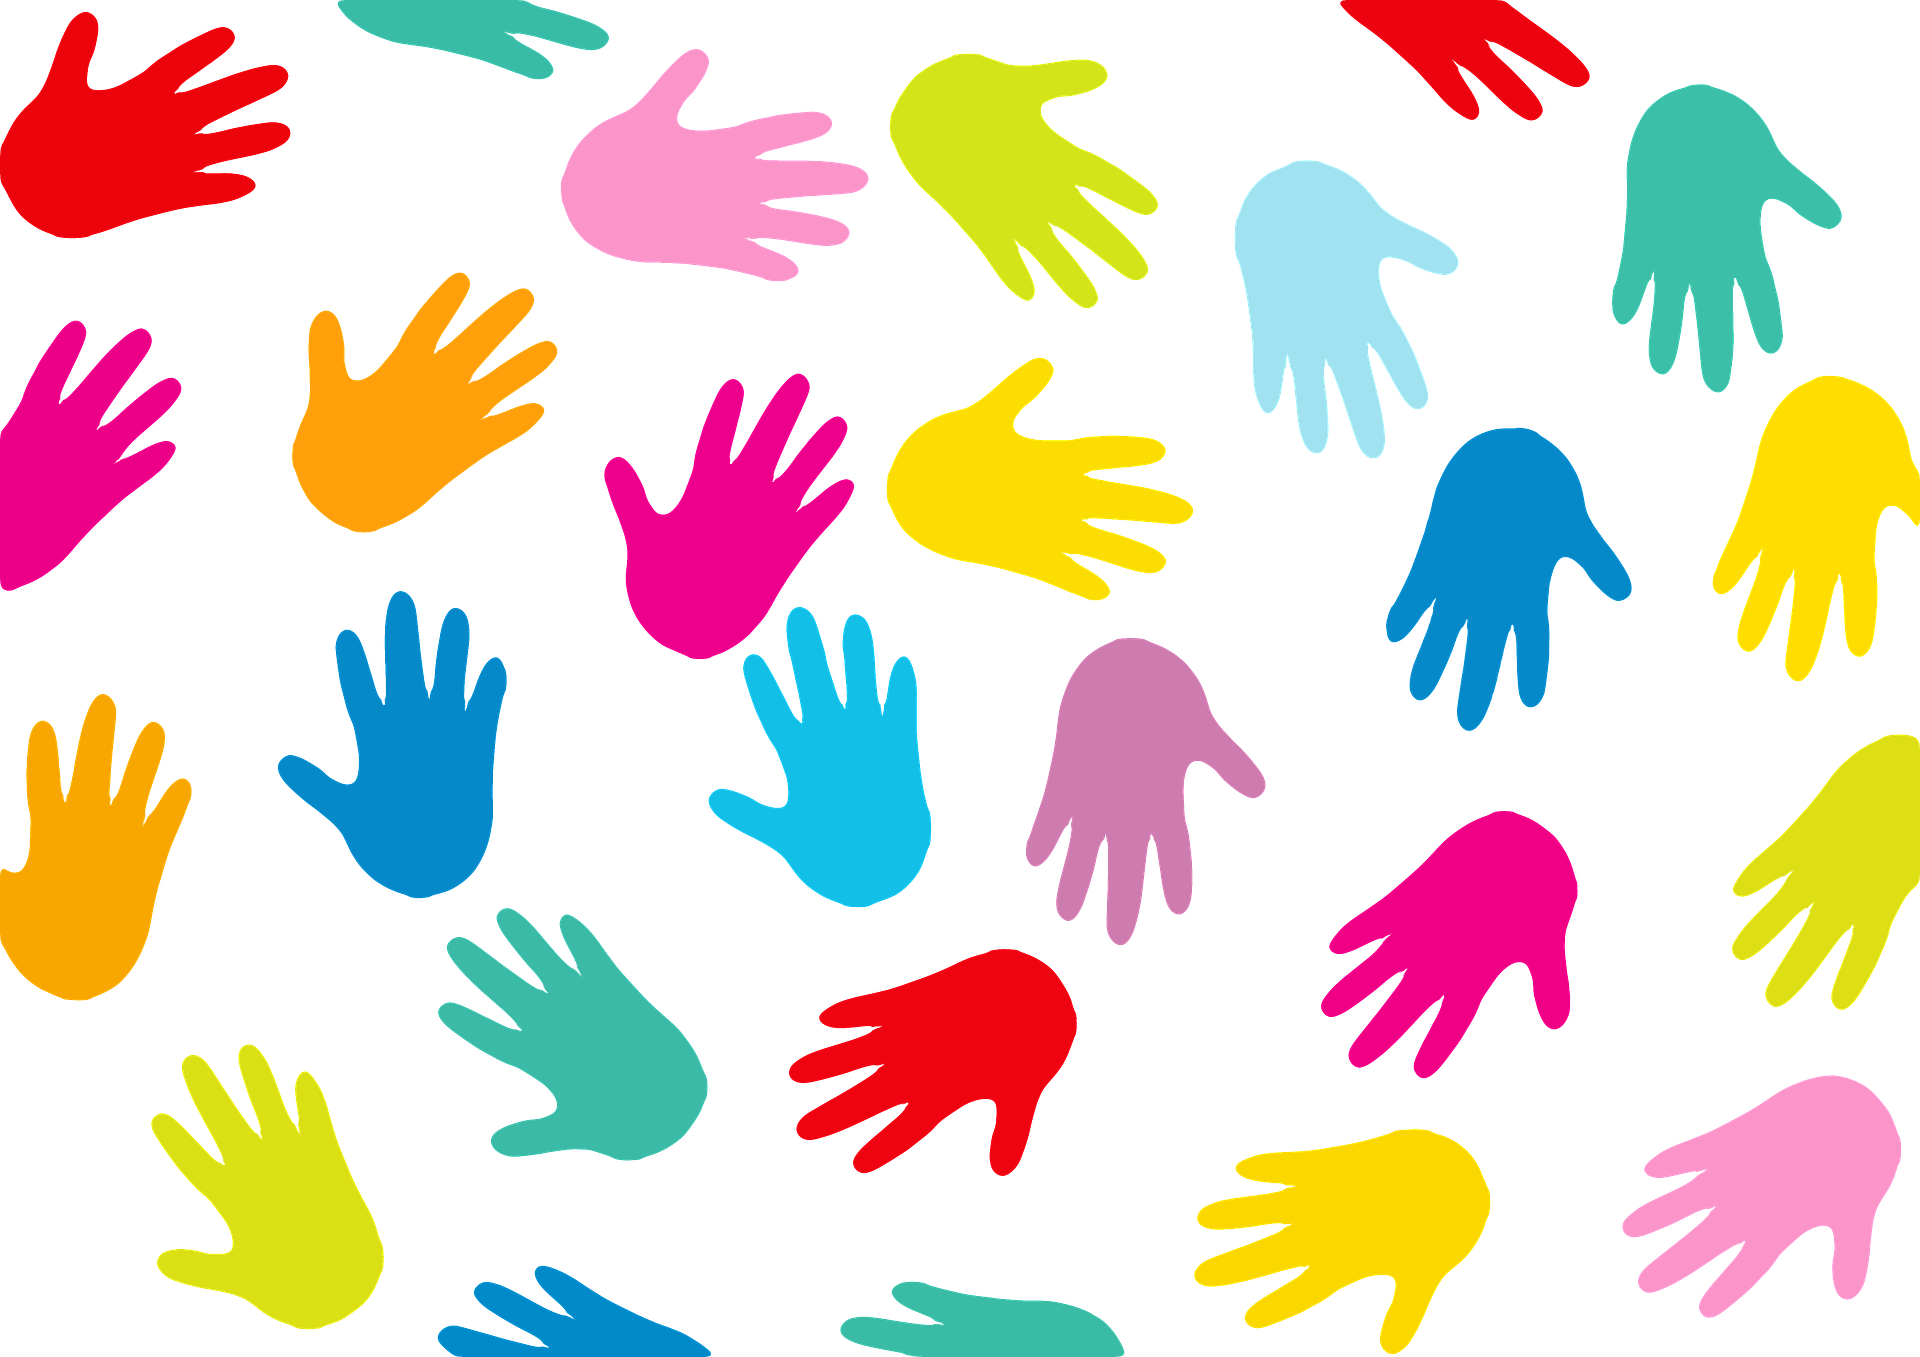 Image of hands